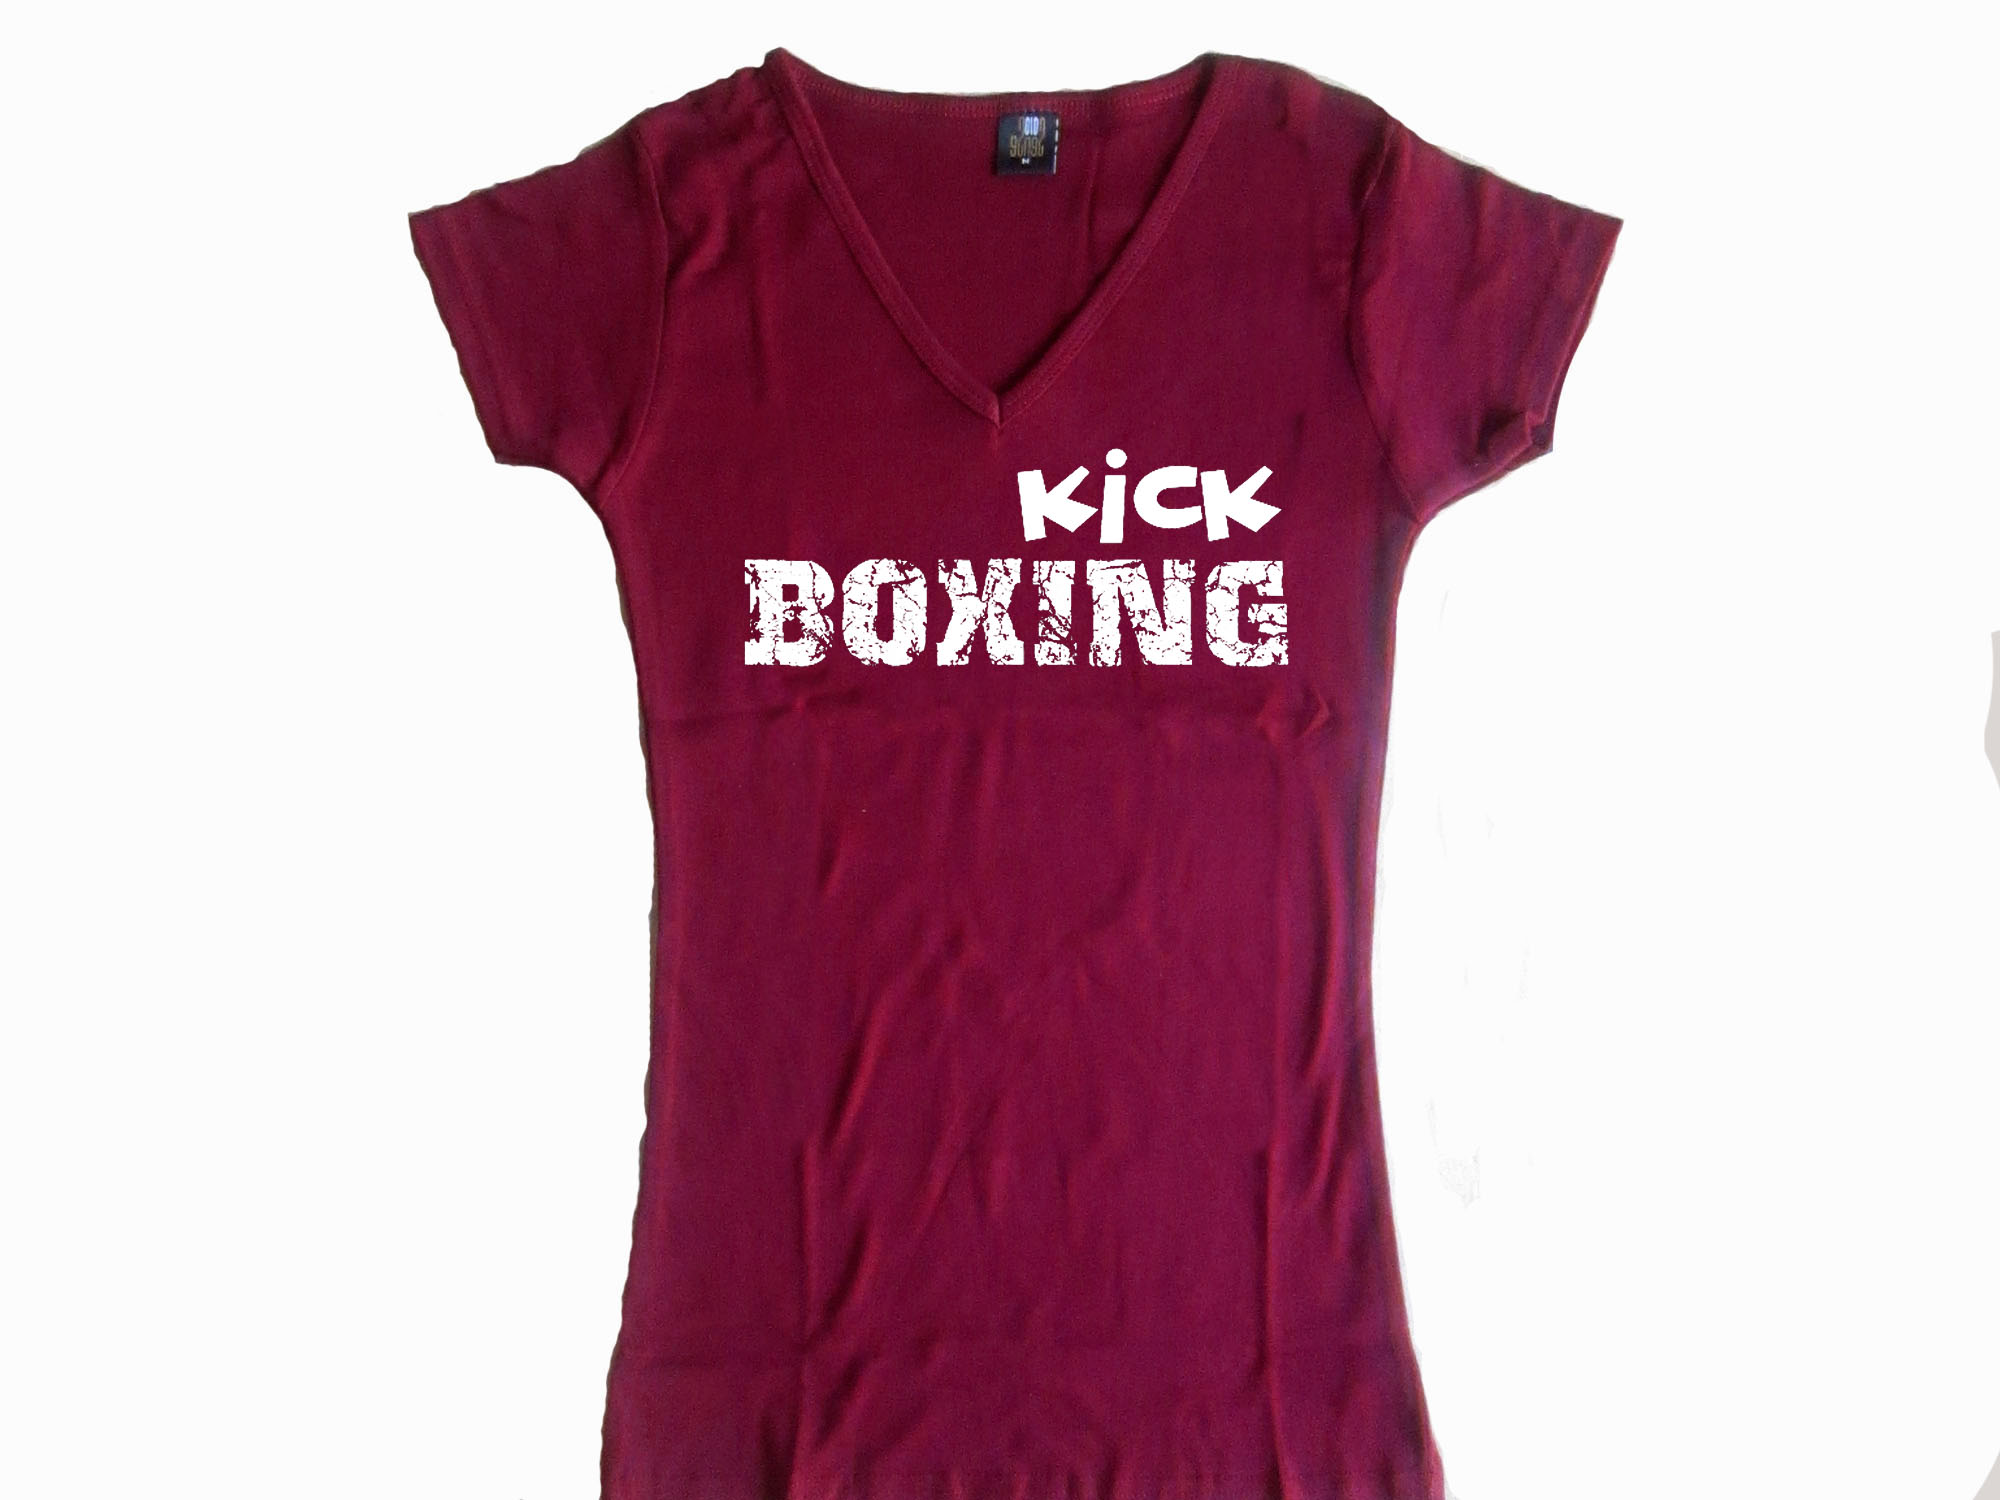 Kickboxing distressed print women bordeaux t-shirt